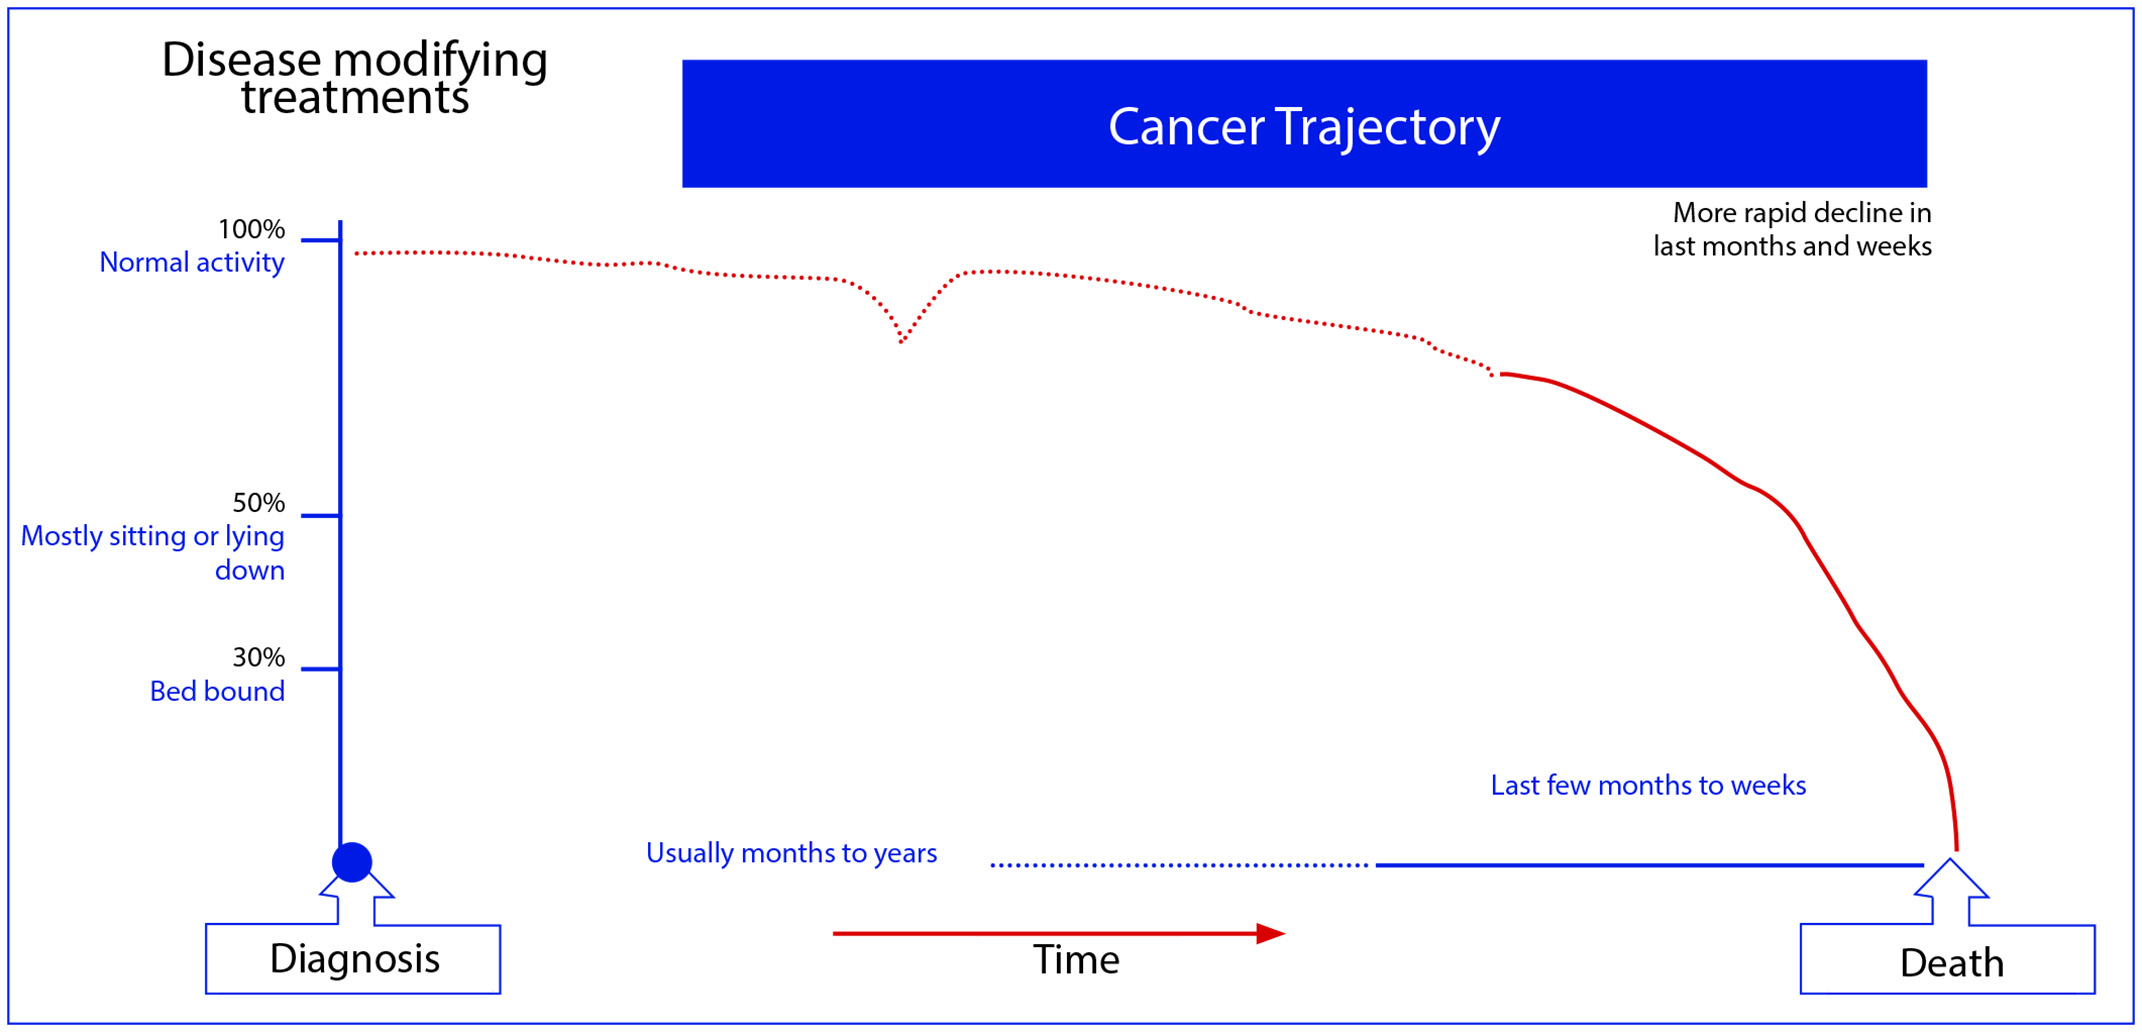 Cancer Trajectory